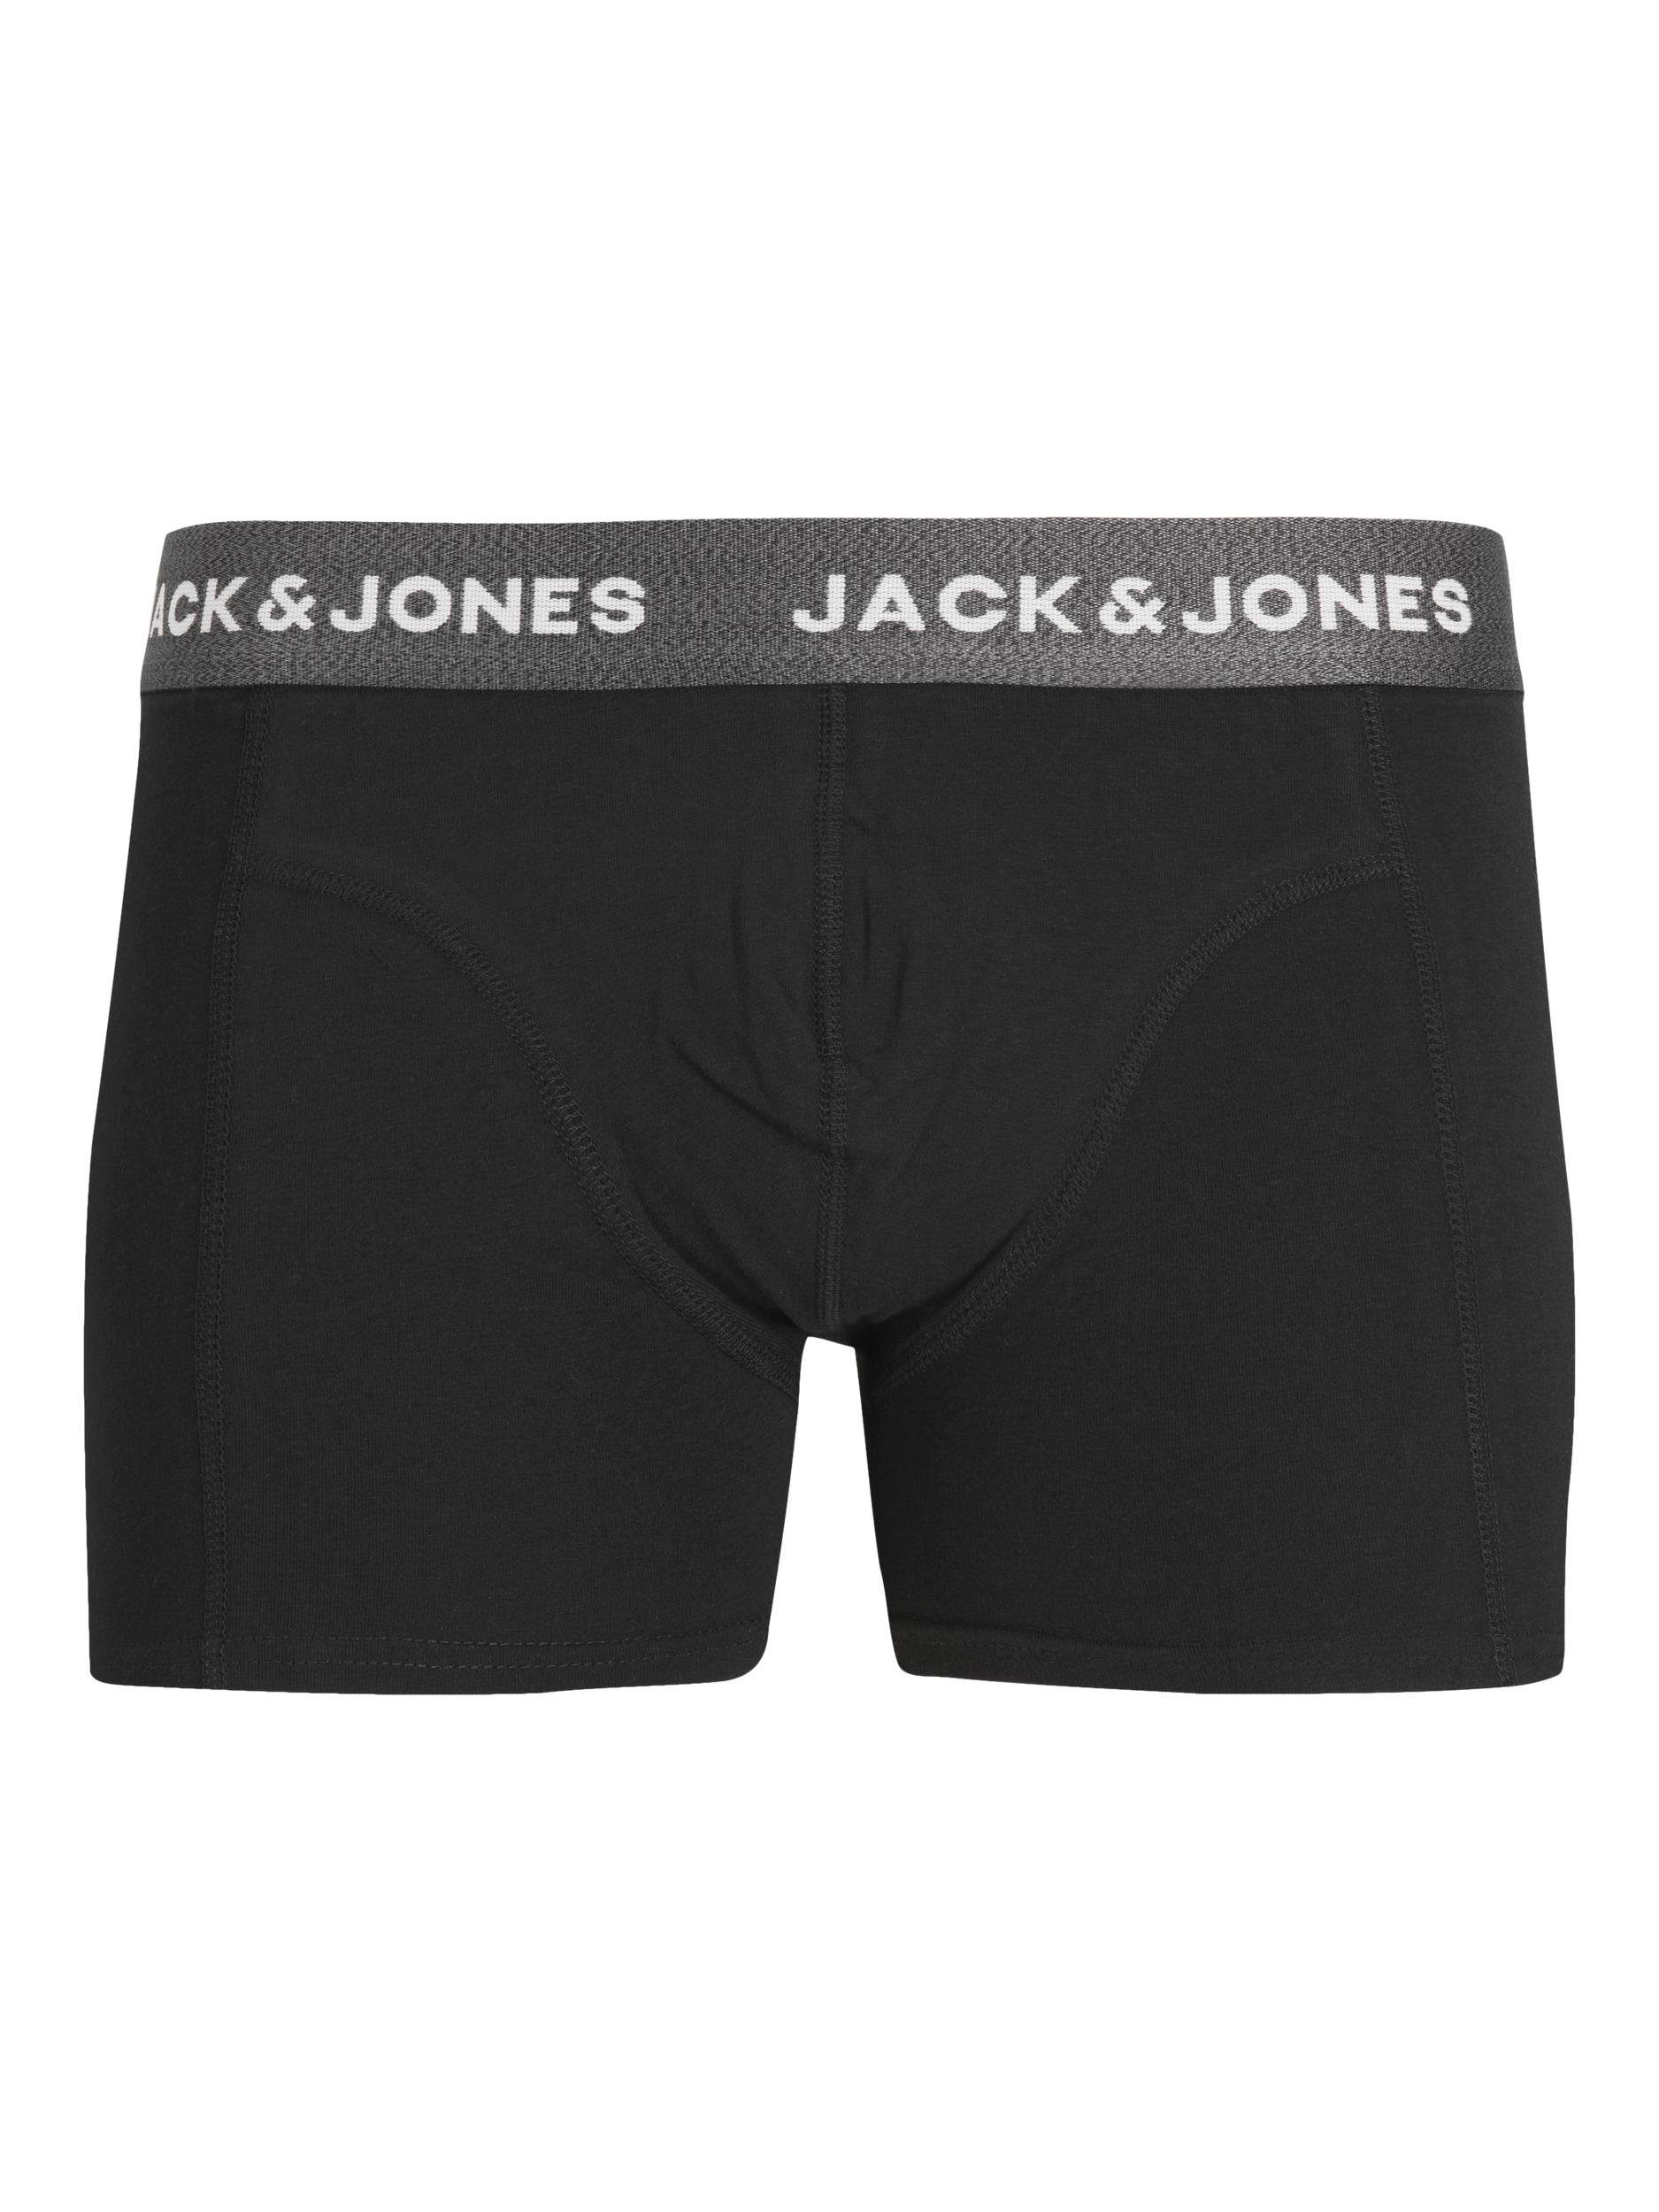 Boxershorts & Jack TRUNKS Pack 3er JACBILL Boxershorts Shorts Jones